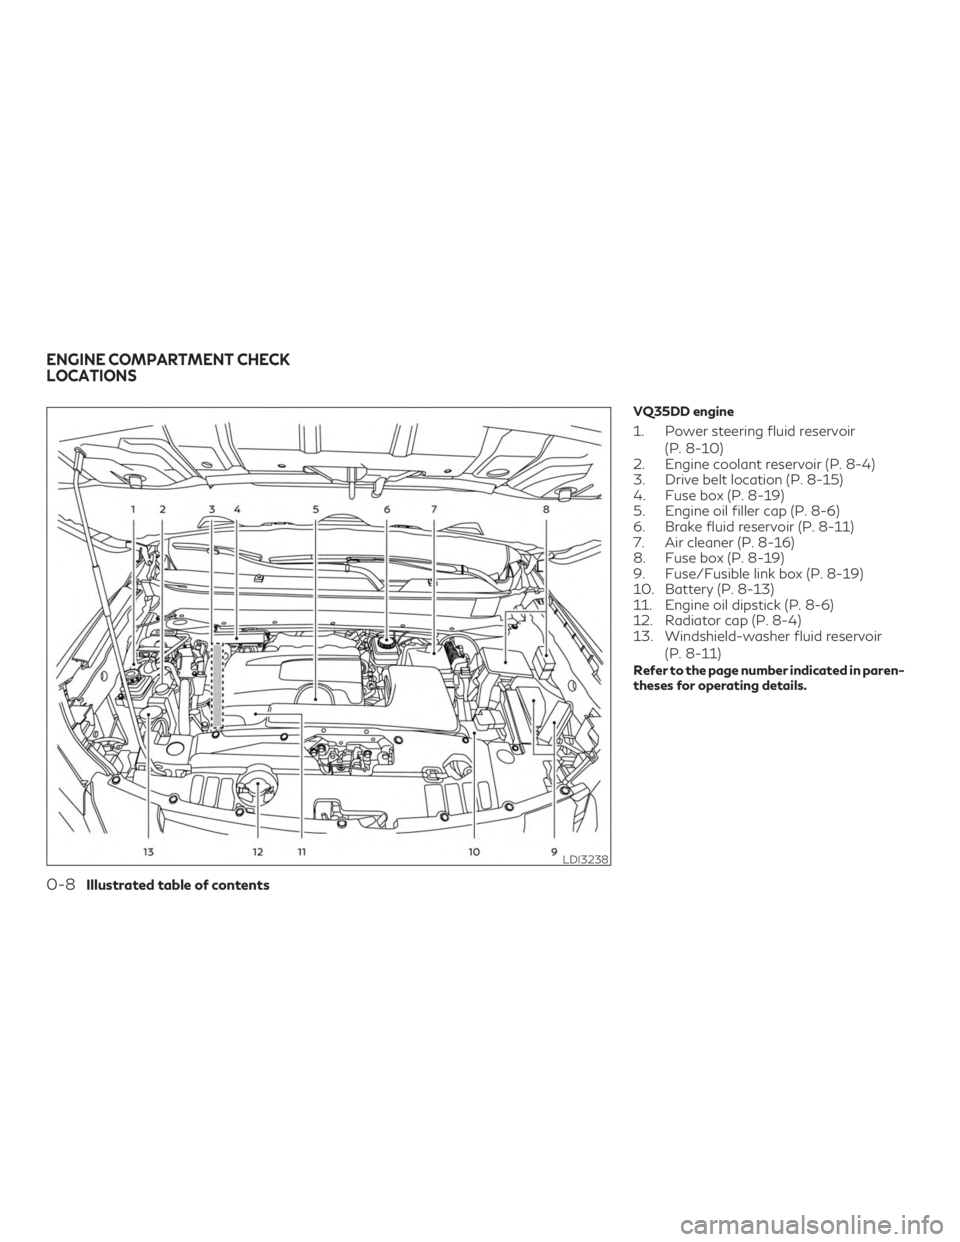 INFINITI QX60 2020  Owners Manual VQ35DD engine
1. Power steering fluid reservoir(P. 8-10)
2. Engine coolant reservoir (P. 8-4)
3. Drive belt location (P. 8-15)
4. Fuse box (P. 8-19)
5. Engine oil filler cap (P. 8-6)
6. Brake fluid re